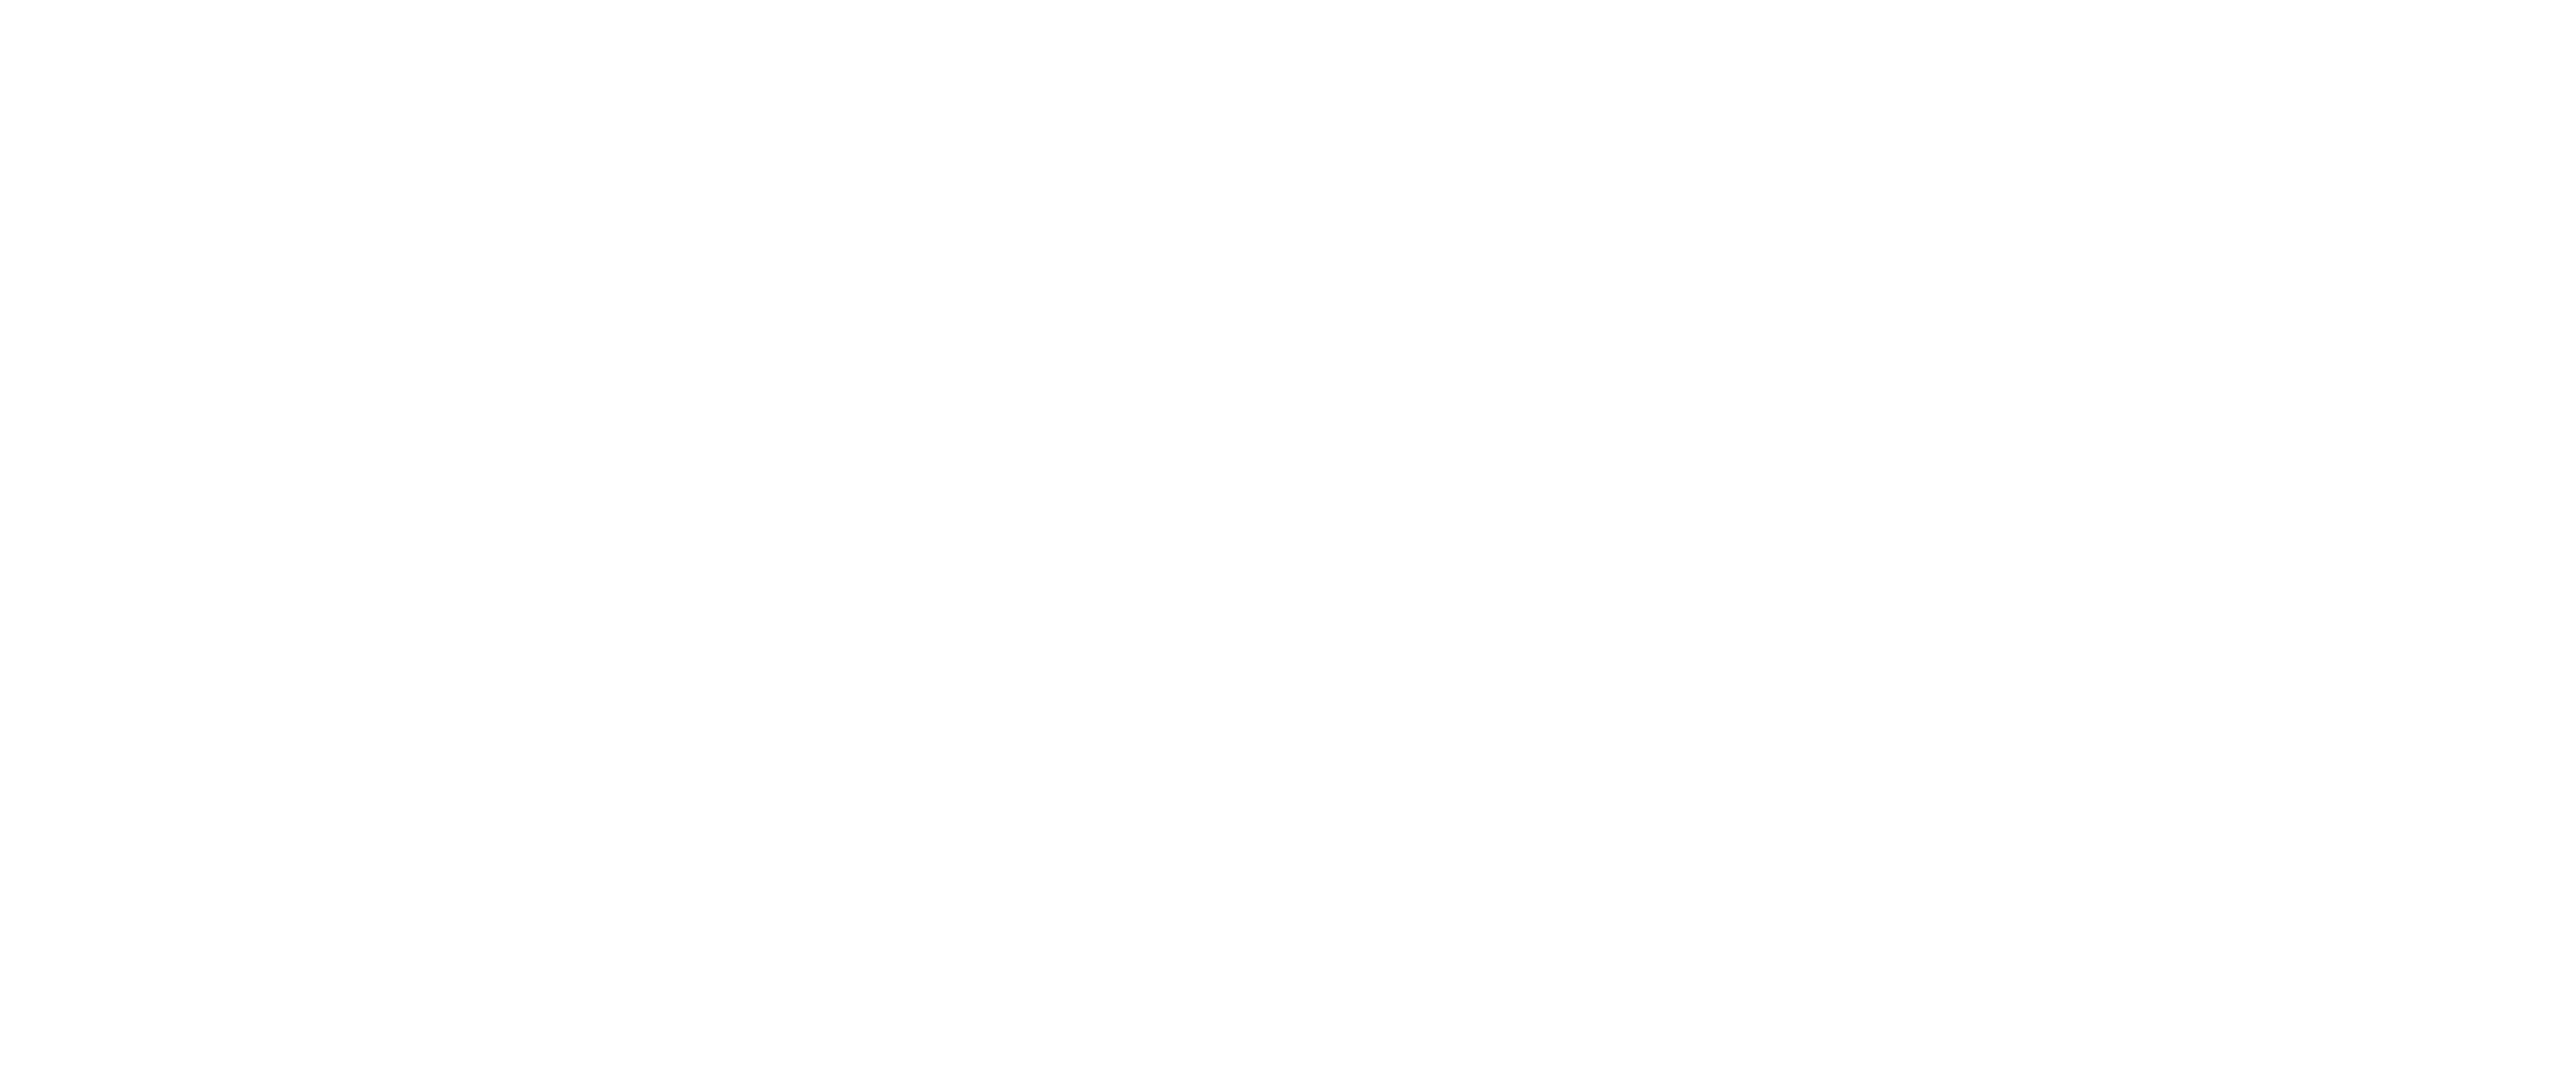 Robologic